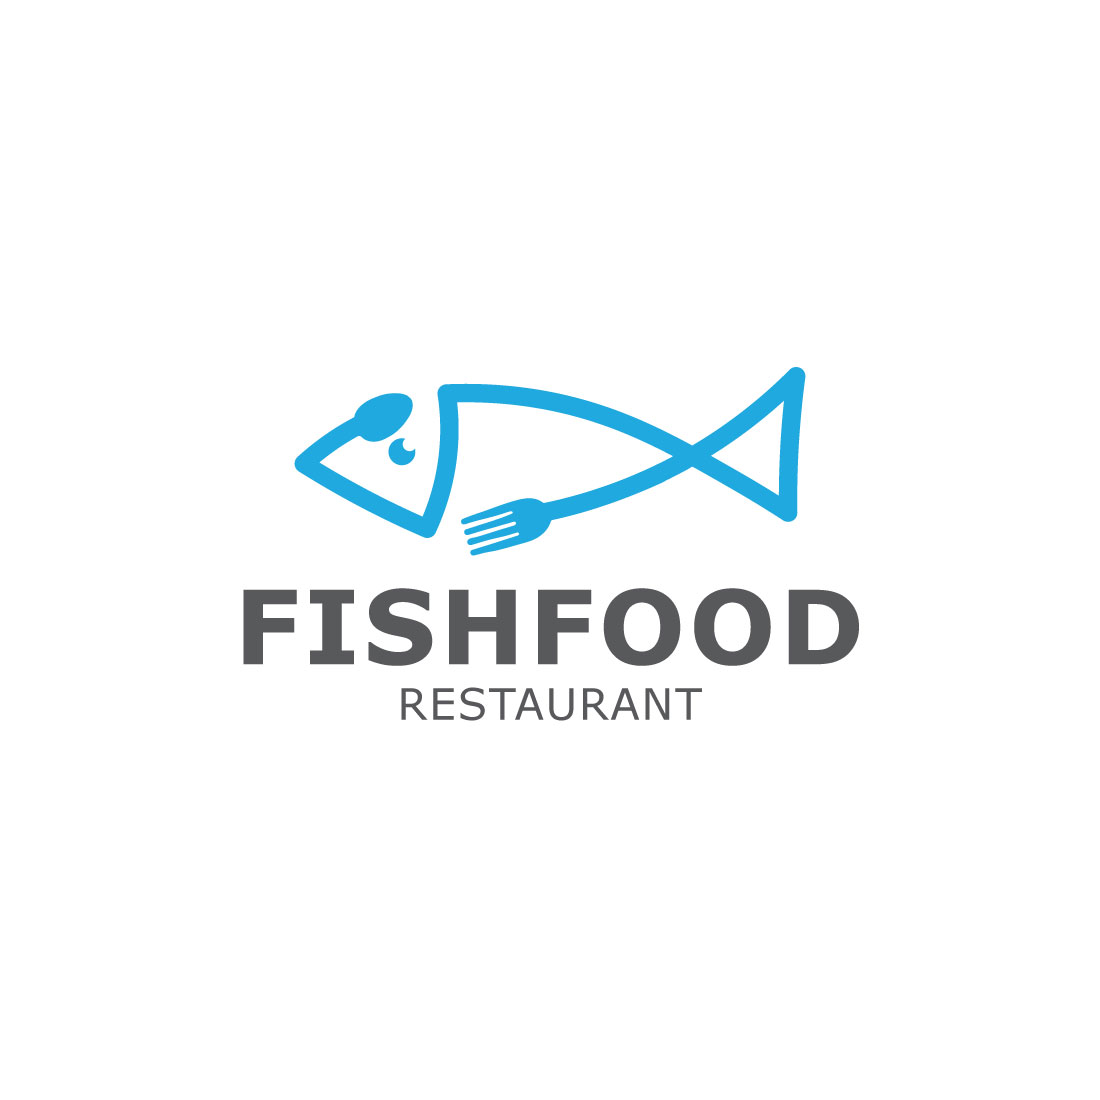 Initial Fish Food Restaurant design preview image.